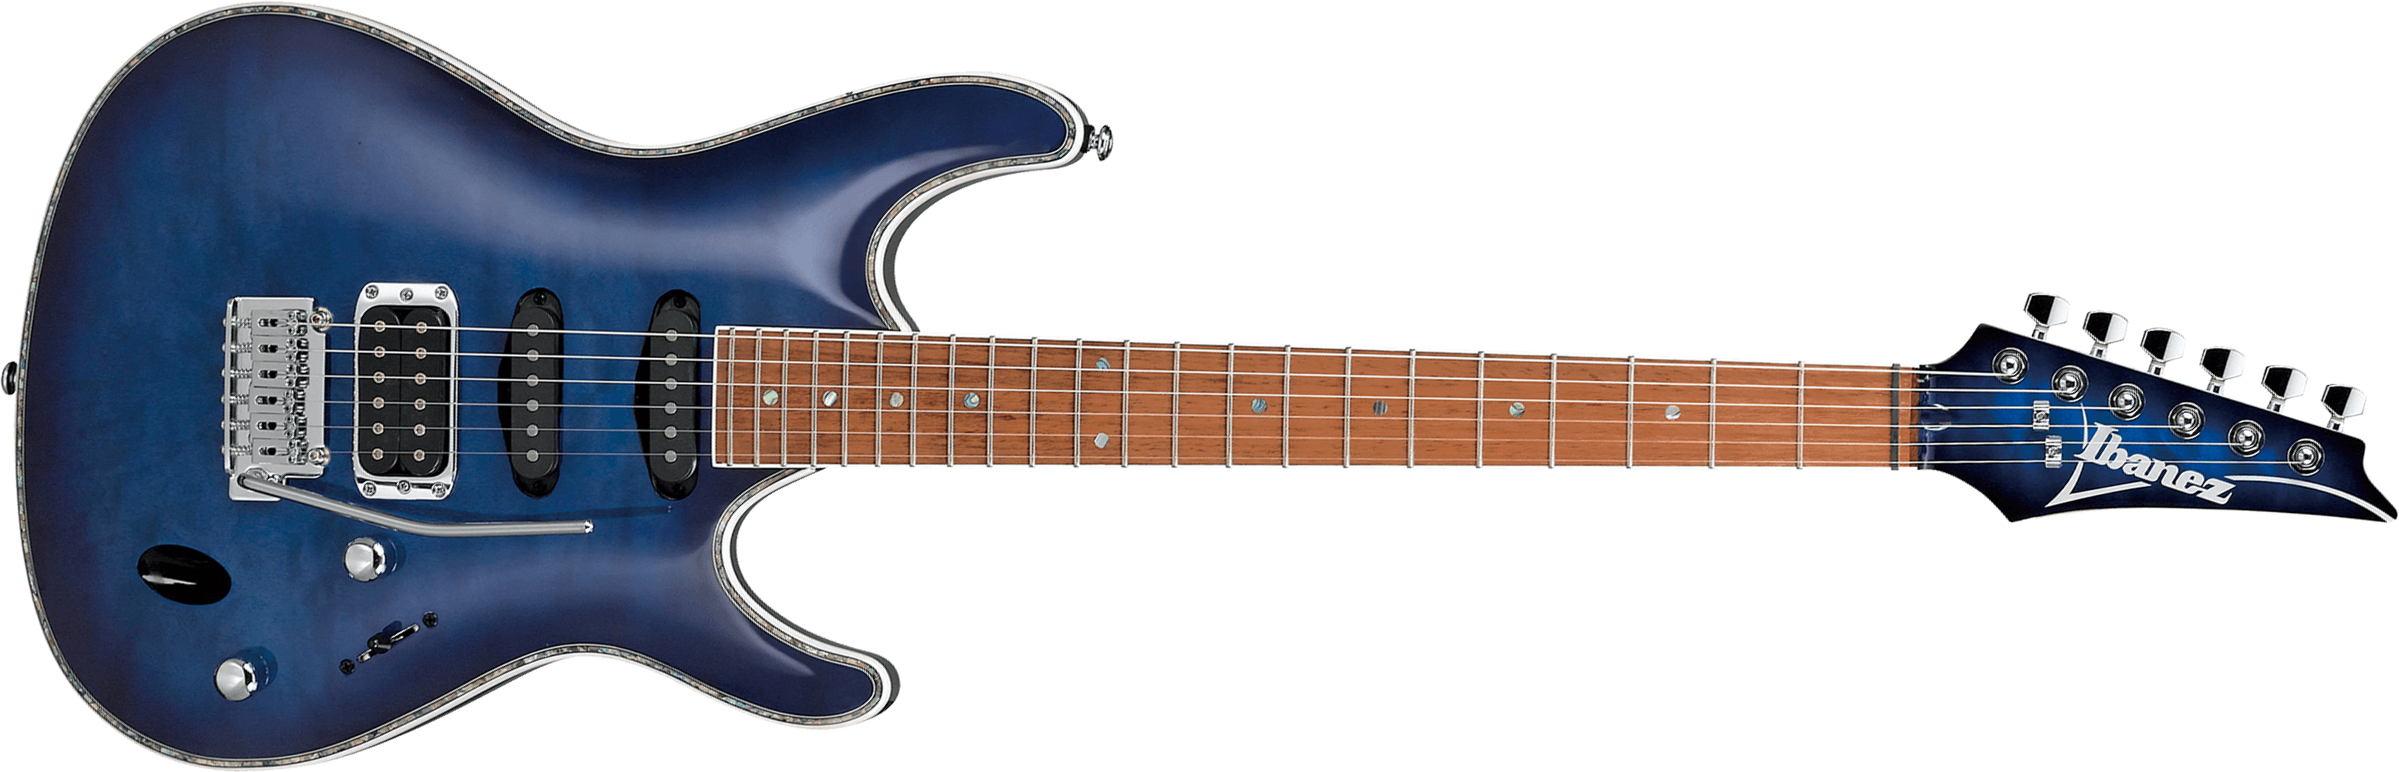 Ibanez Sa360nqm Spb Standard Hss Trem Jat - Sapphire Blue - Str shape electric guitar - Main picture